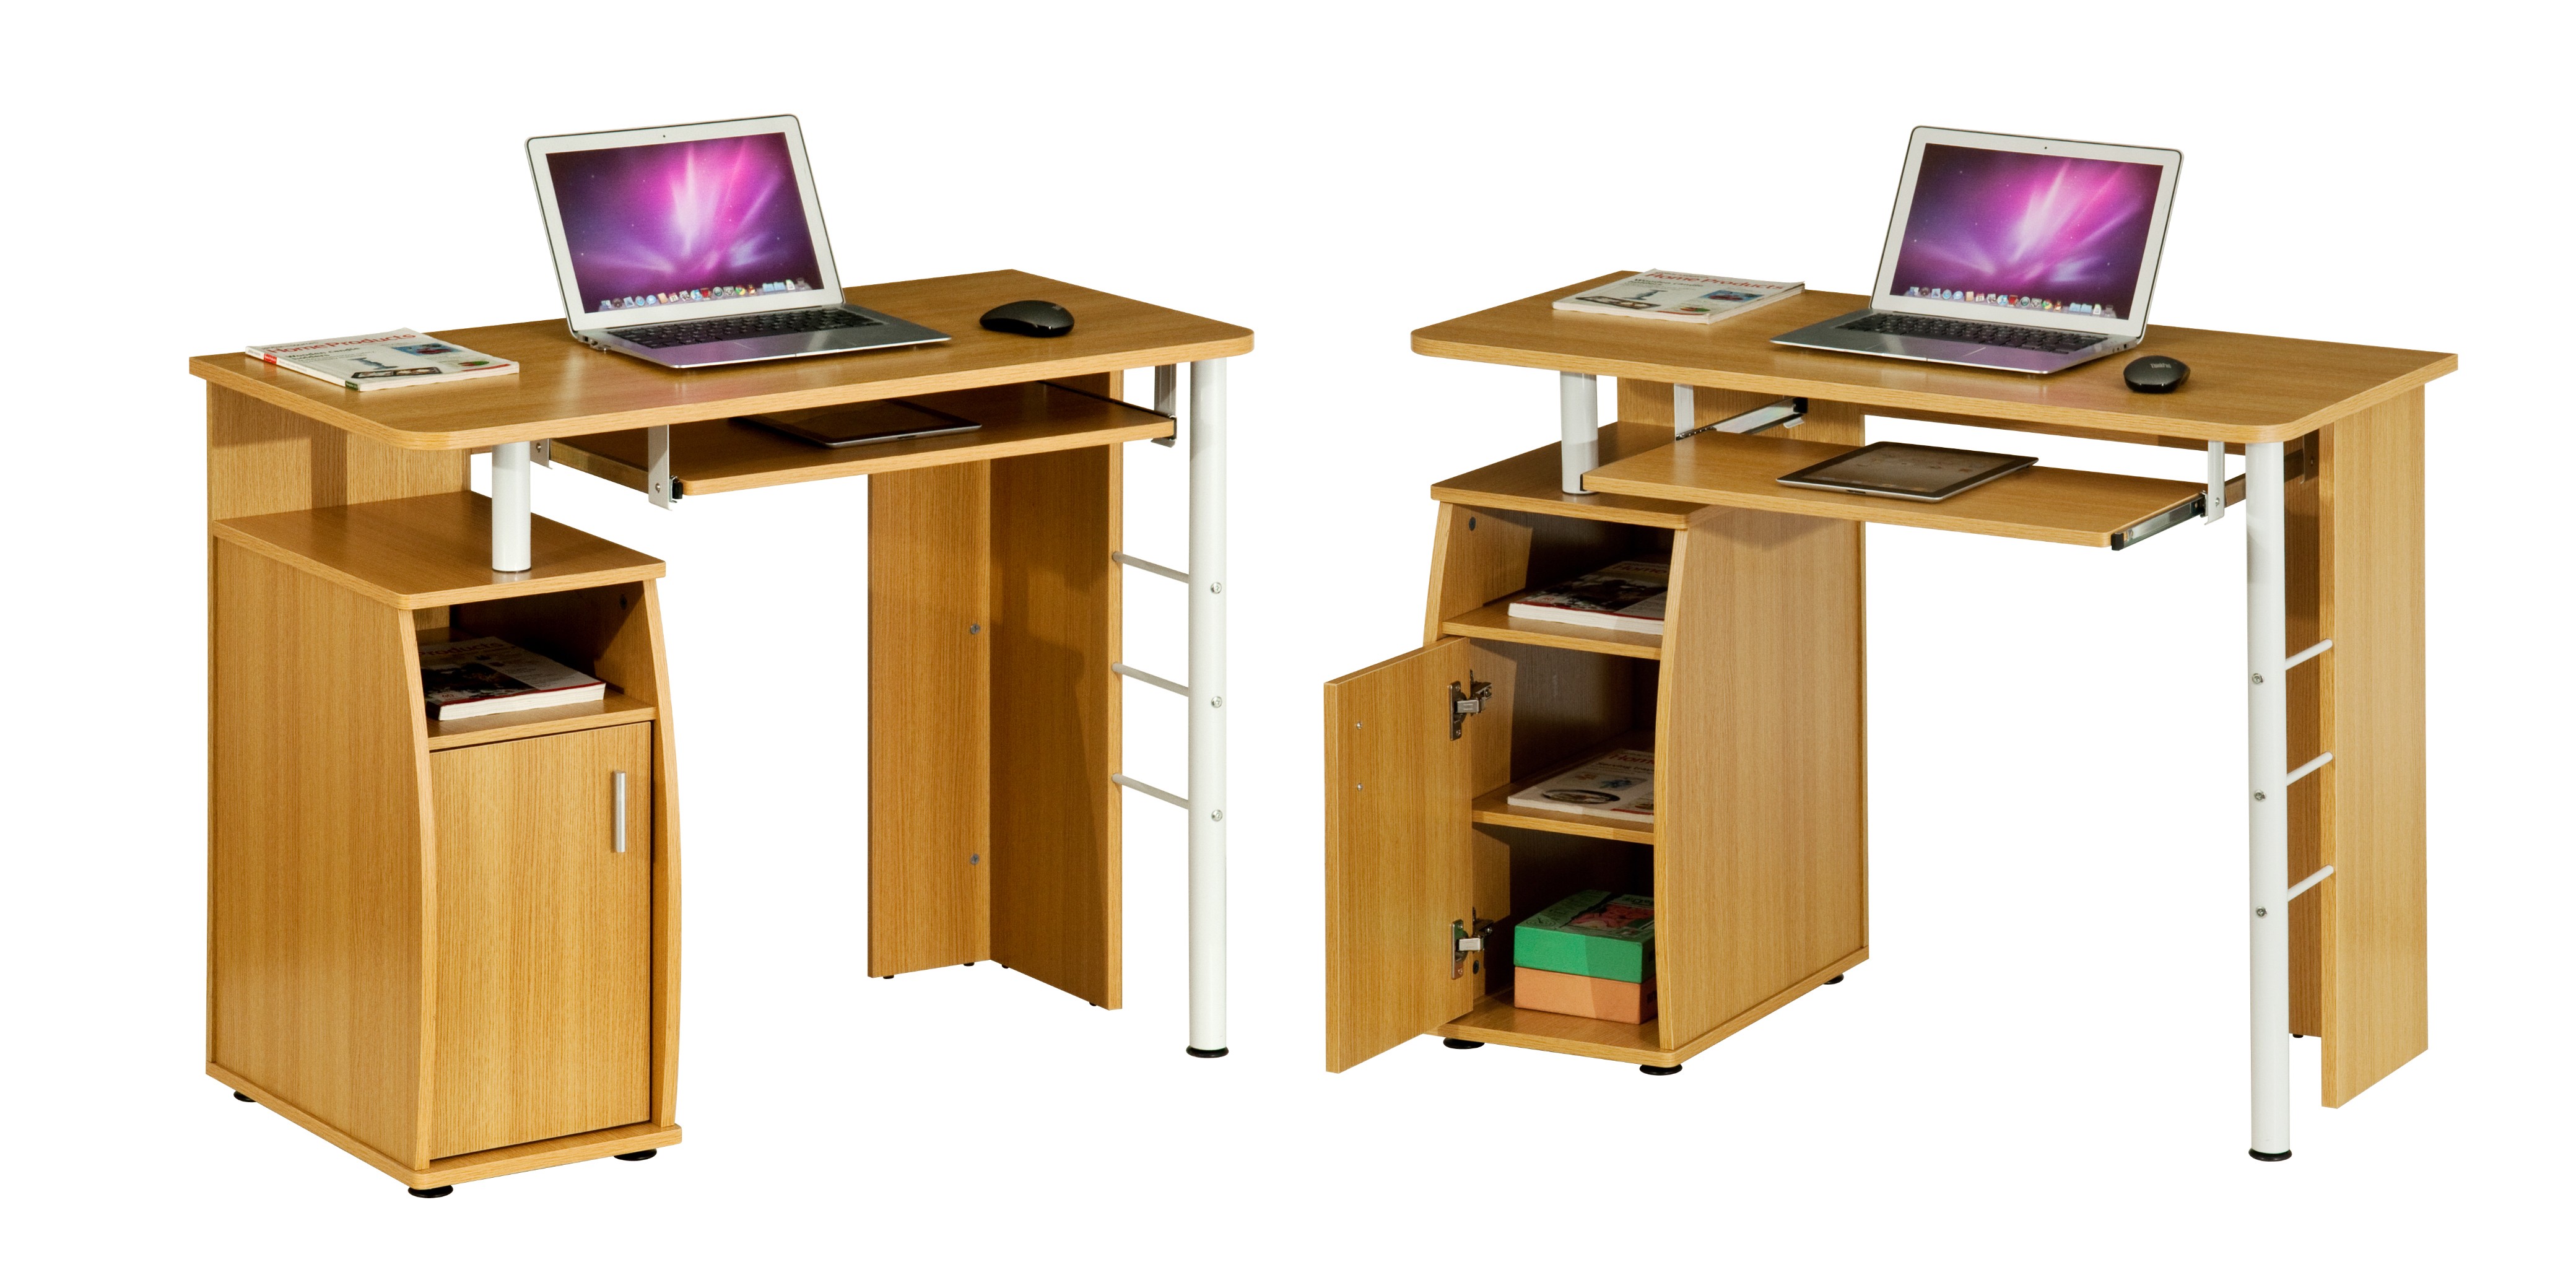 Desk for home using